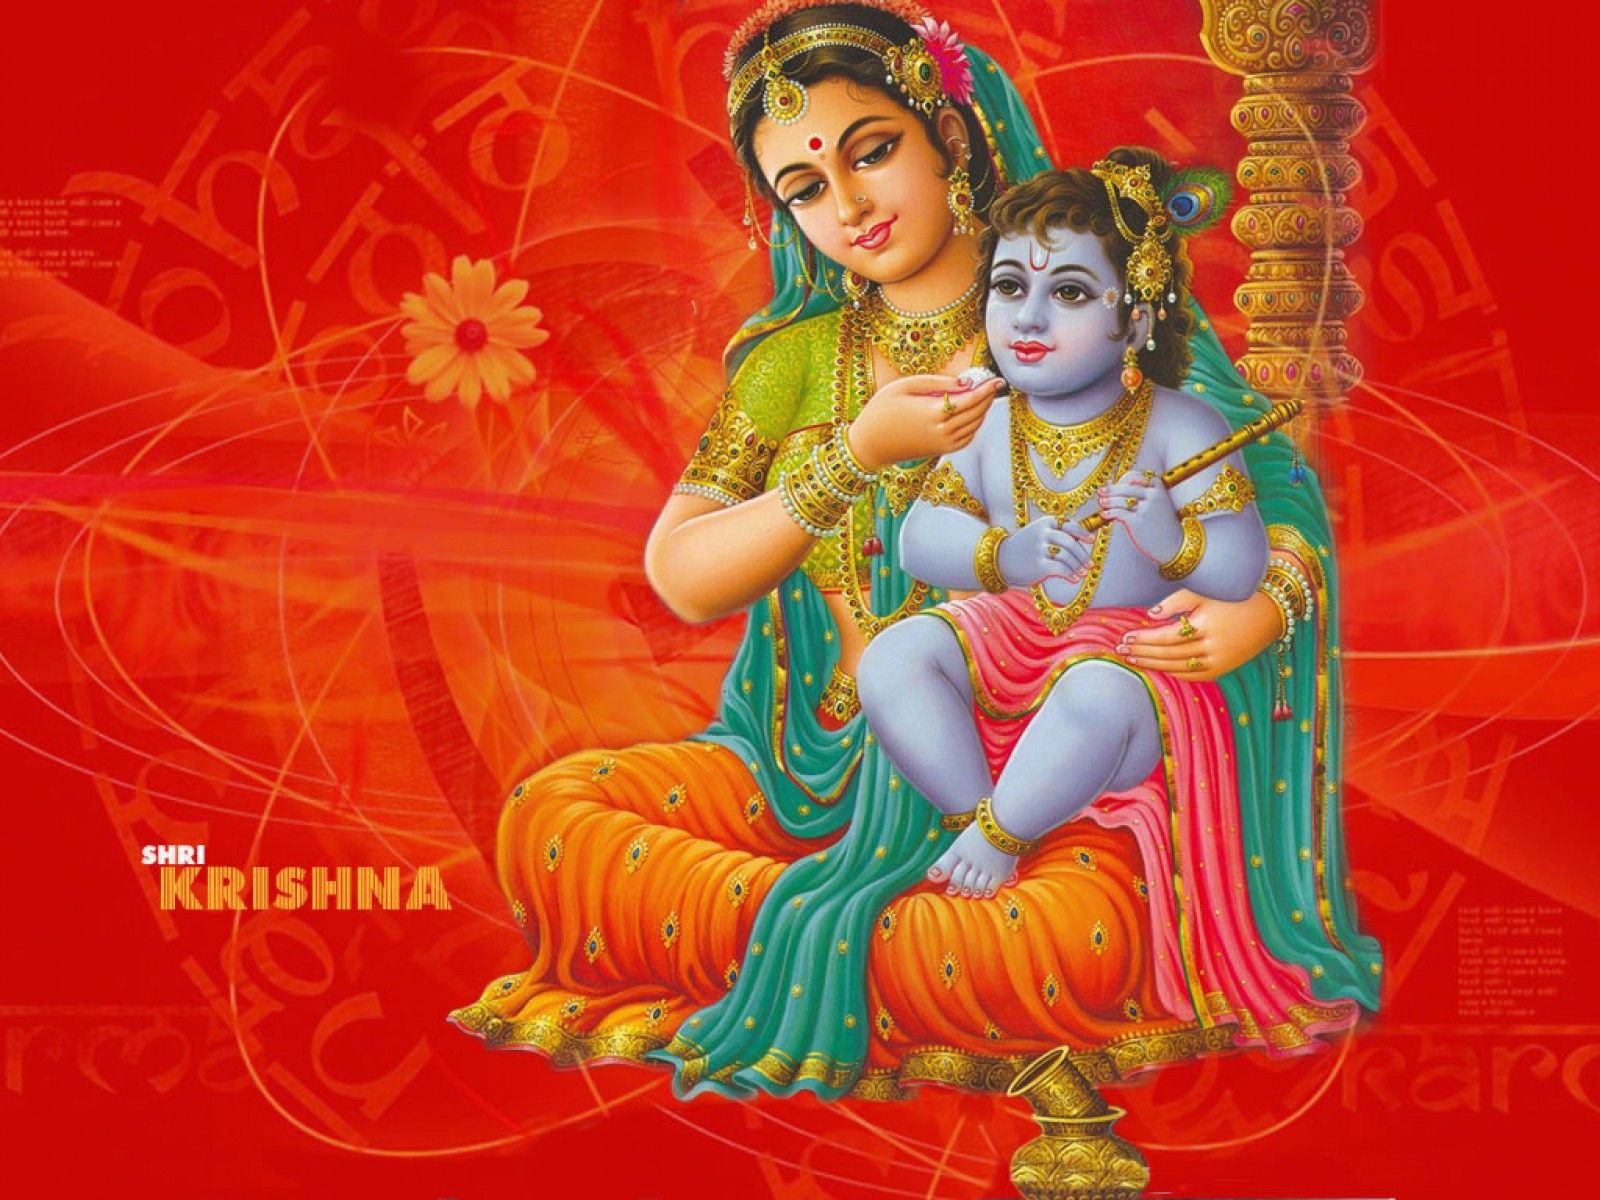 Lord Krishna. Lord krishna wallpaper, Lord krishna, Krishna photo